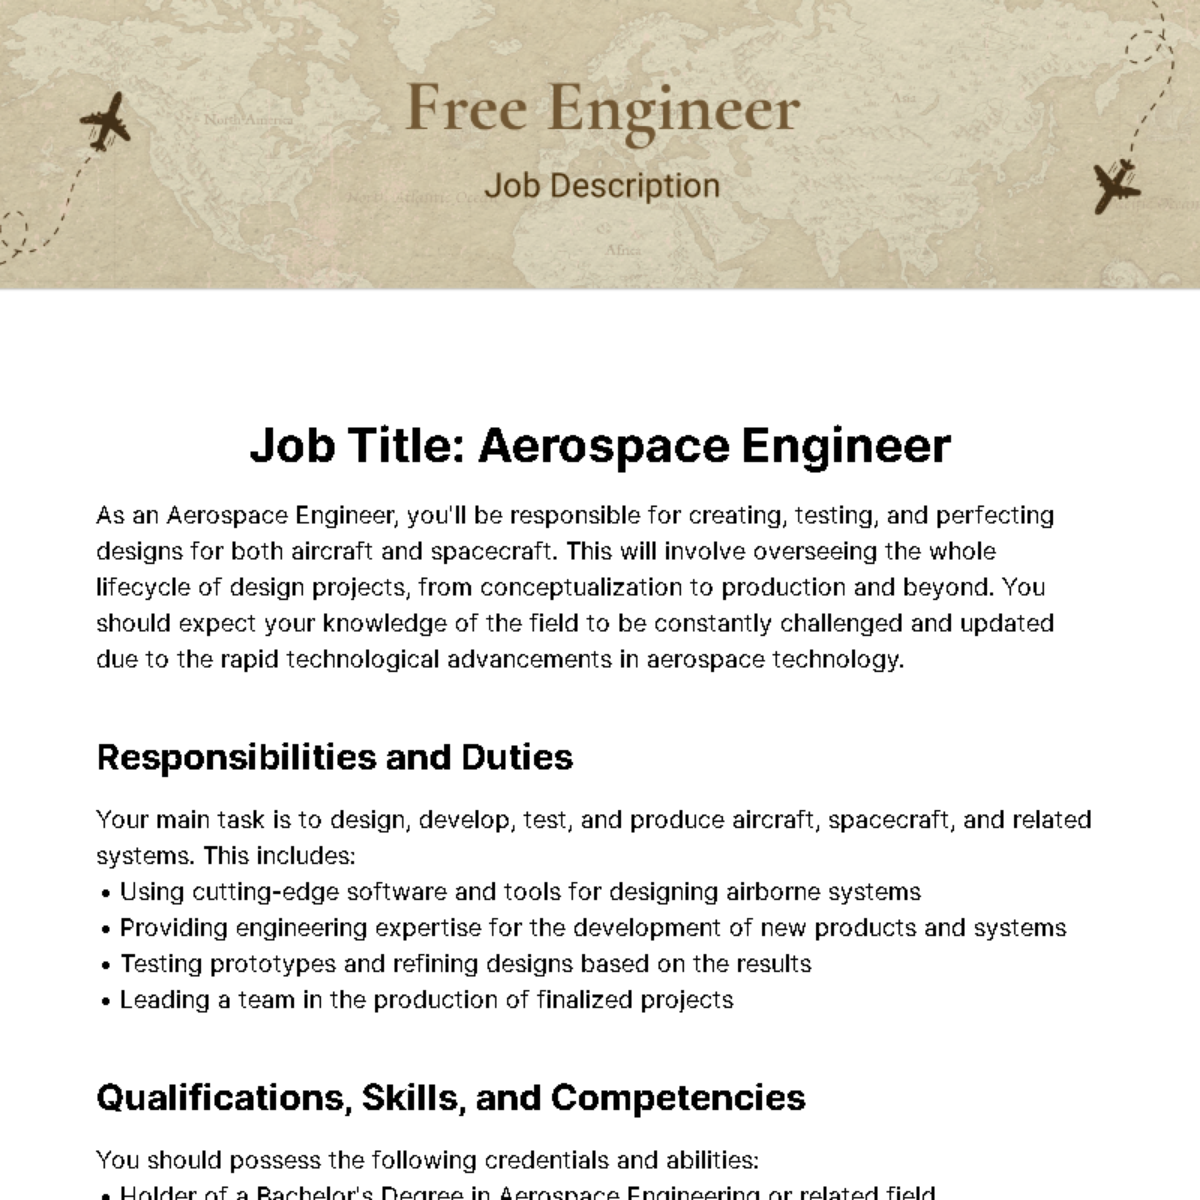 Free Engineer Job Description Template